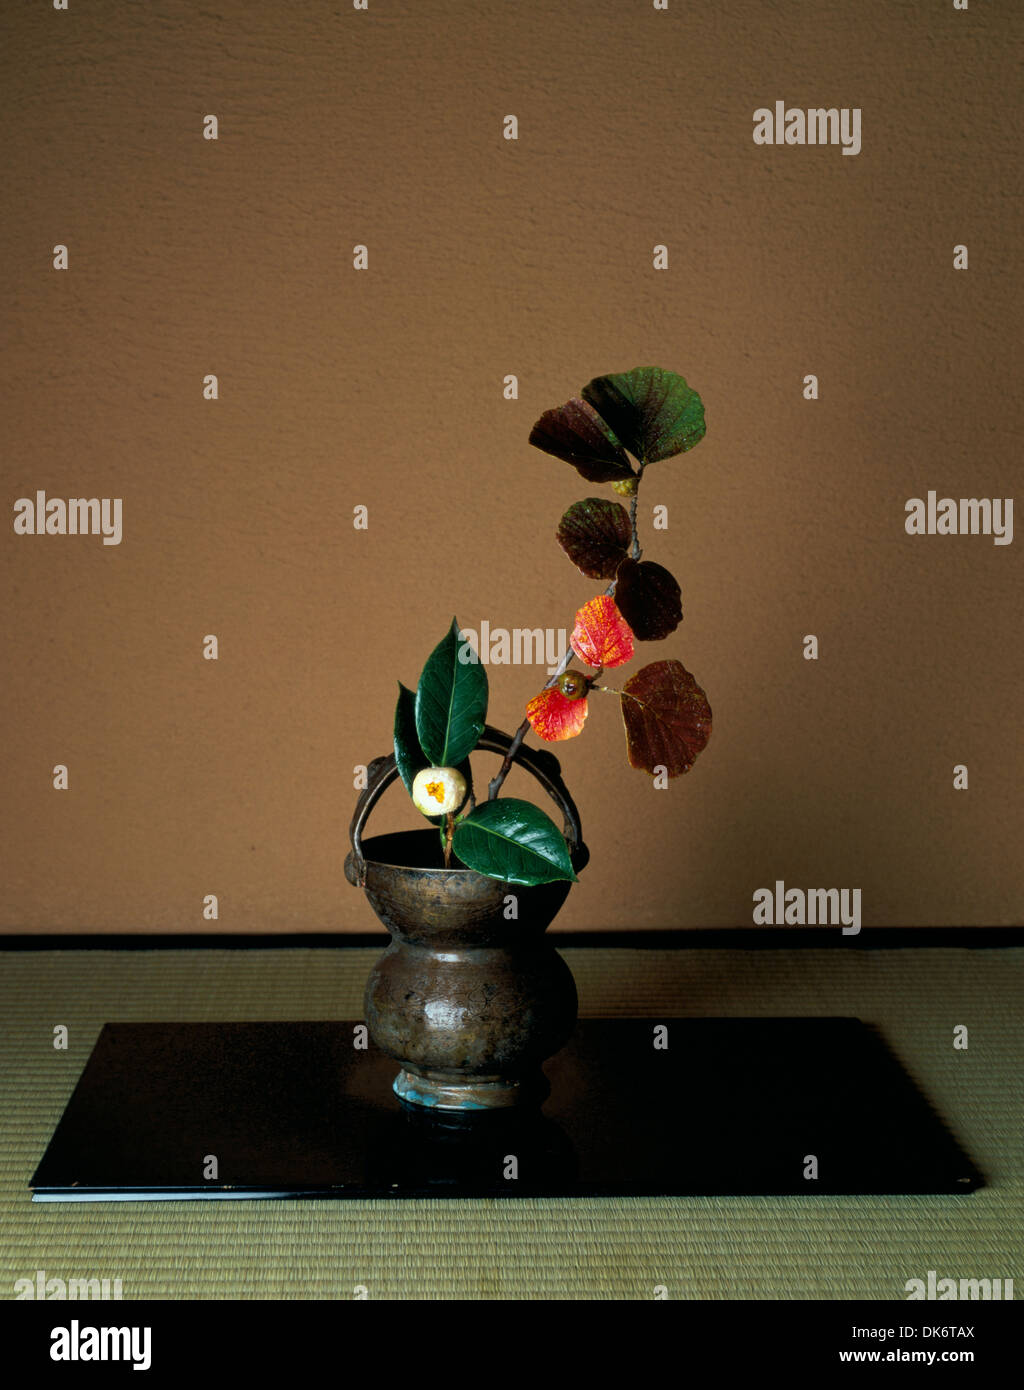 Flowering plant in vase Stock Photo